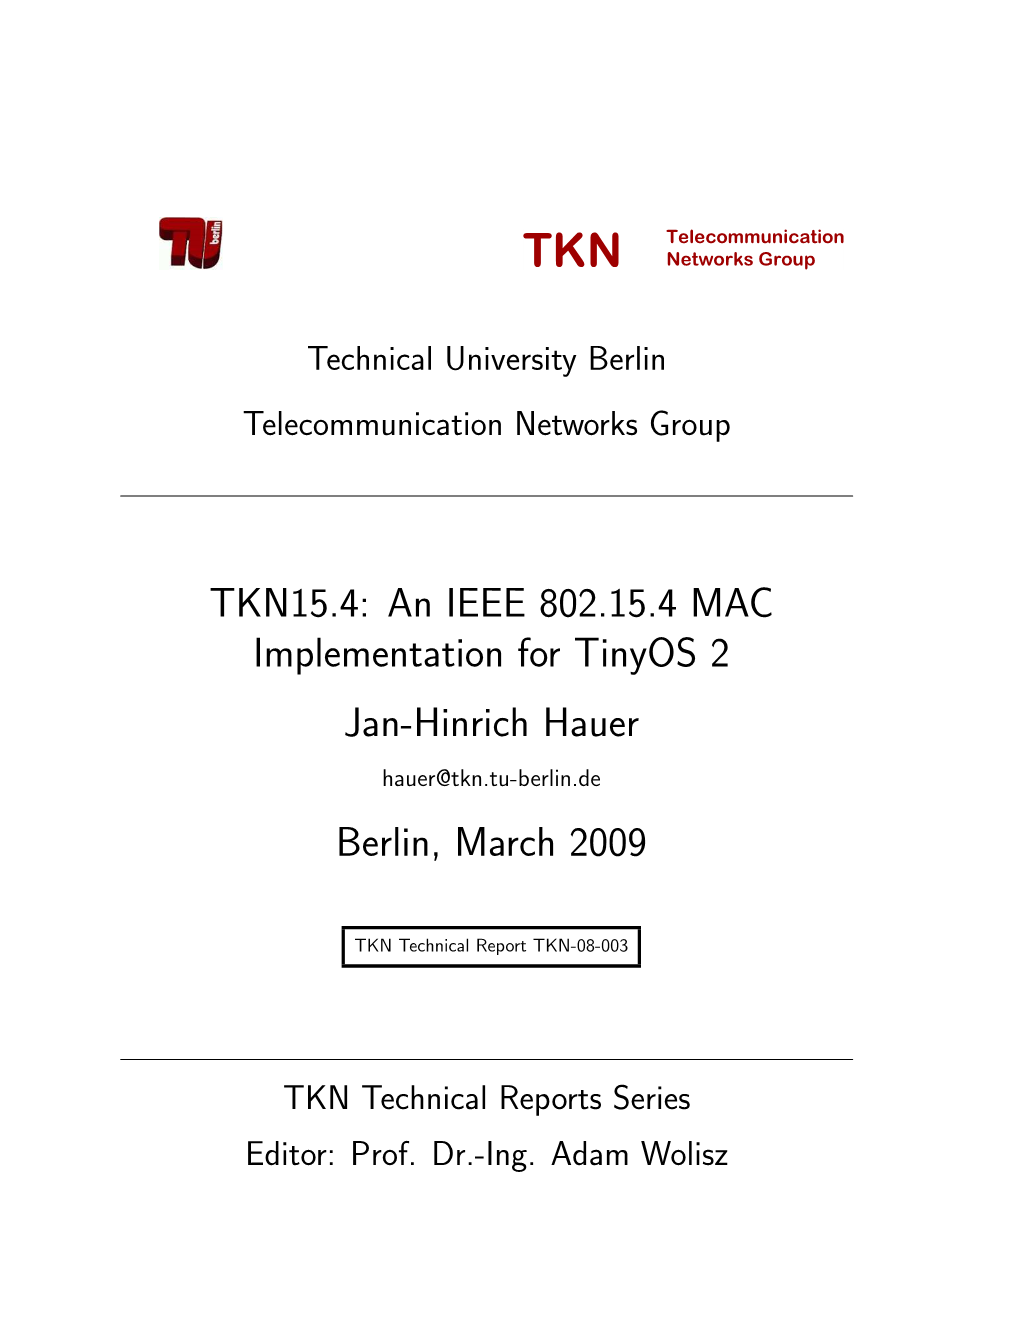 TKN15.4: an IEEE 802.15.4 MAC Implementation for Tinyos 2 Jan-Hinrich Hauer Hauer@Tkn.Tu-Berlin.De Berlin, March 2009